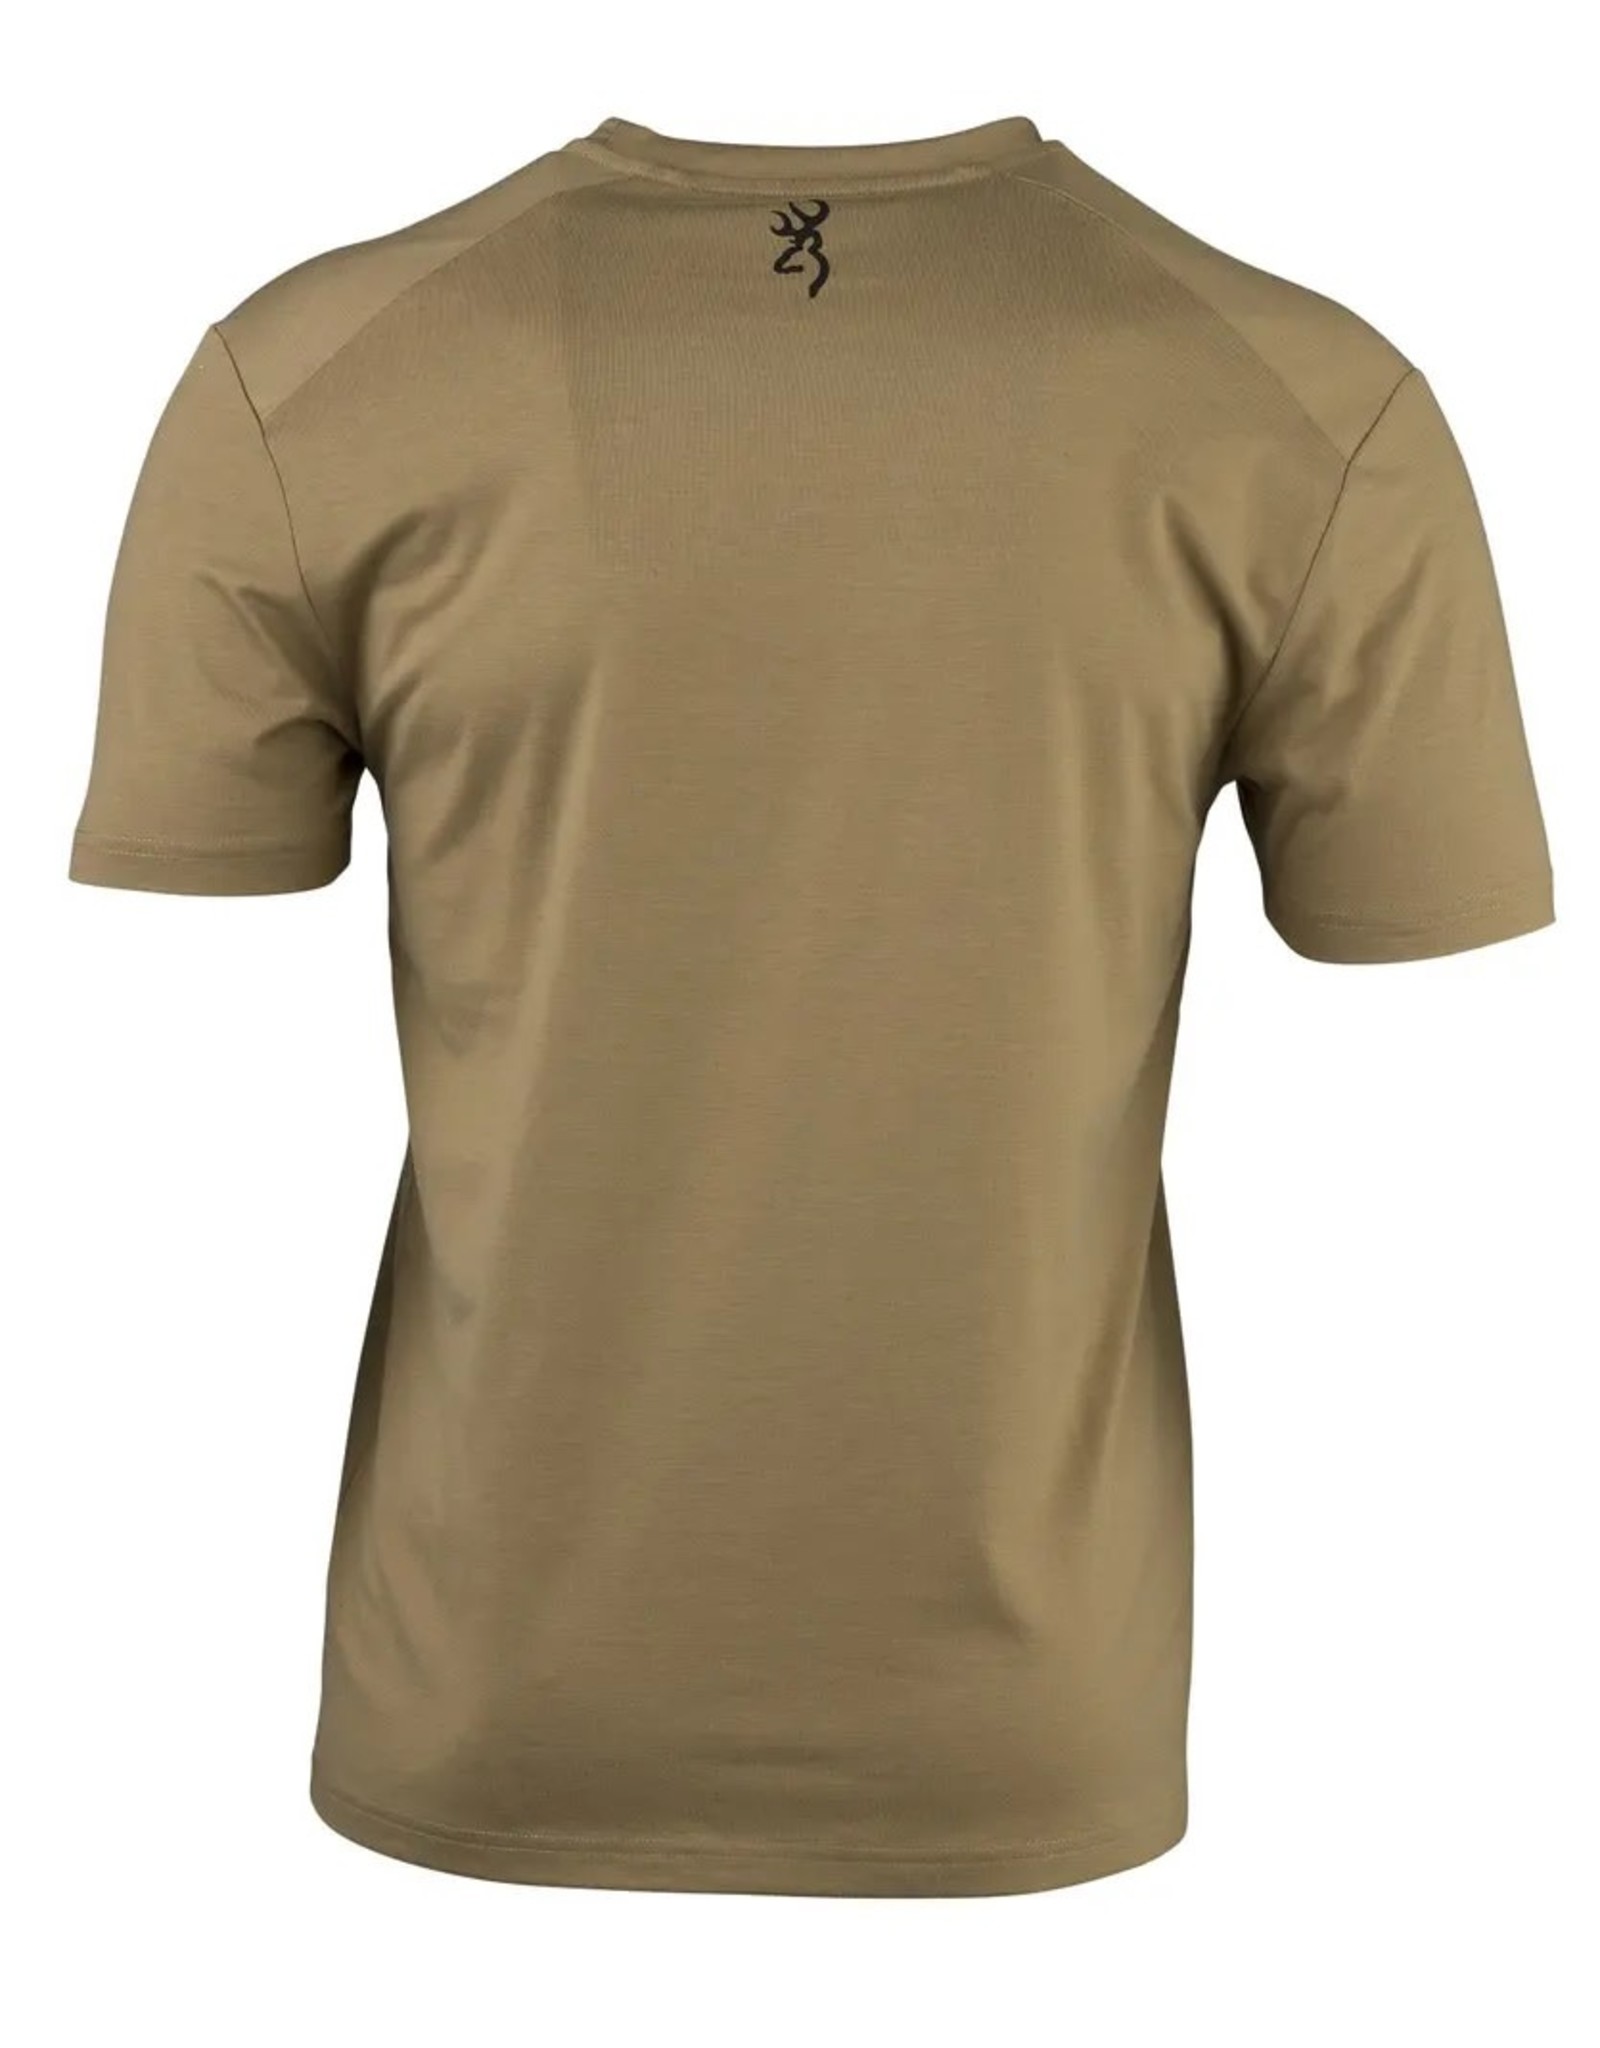 Browning Camp T-Shirt - Mule Deer - Tan - XXL